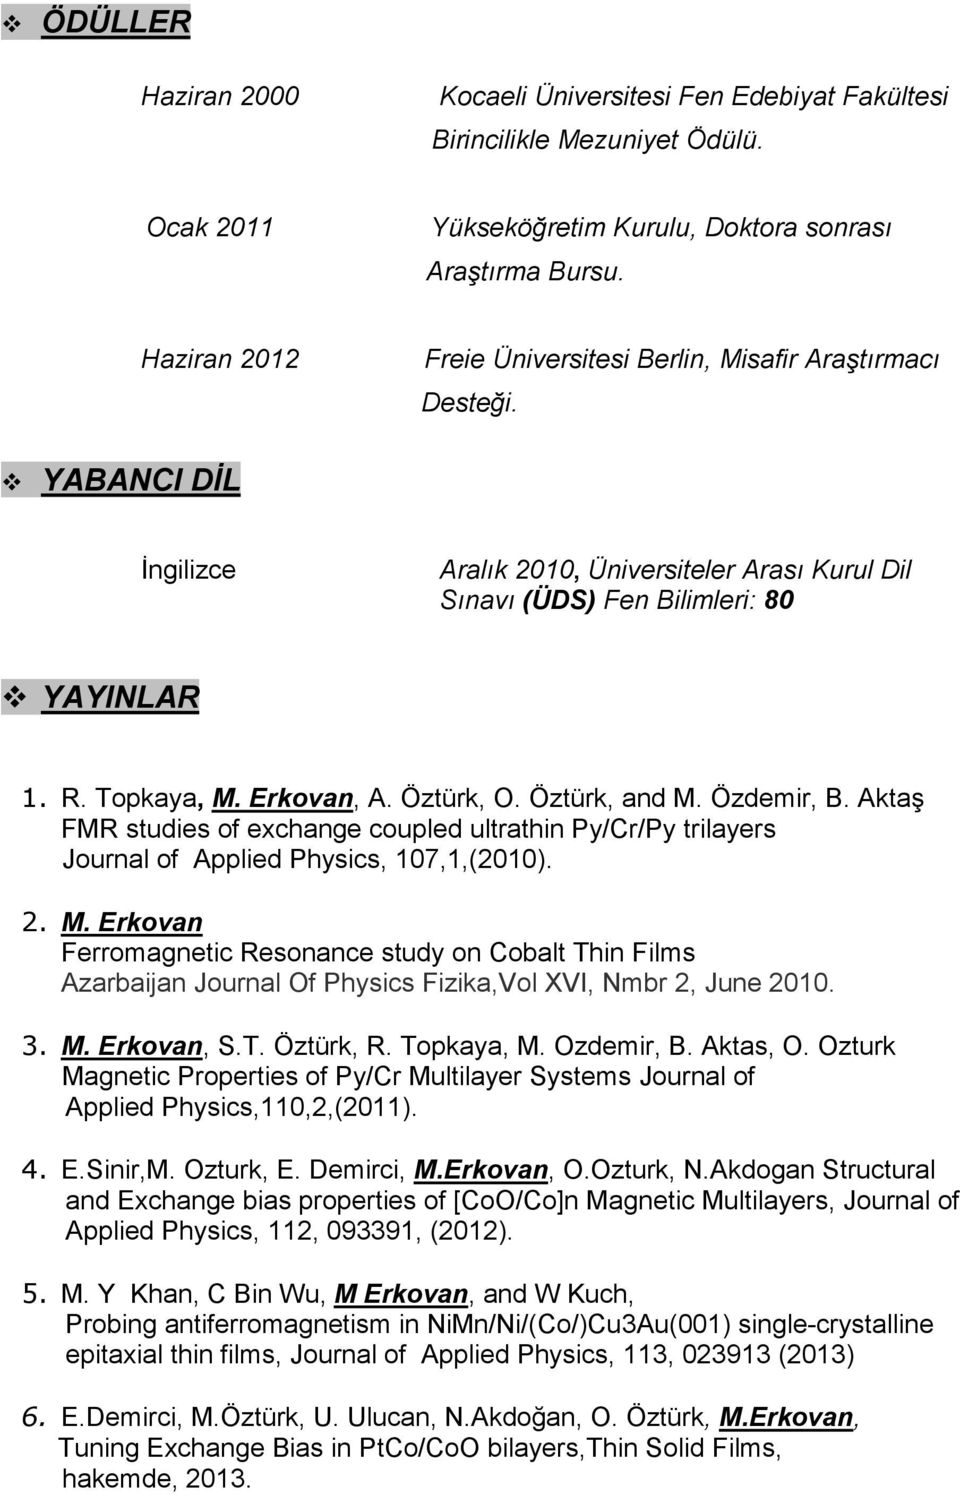 Erkovan, A. Öztürk, O. Öztürk, and M. Özdemir, B. Aktaş FMR studies of exchange coupled ultrathin Py/Cr/Py trilayers Journal of Applied Physics, 107,1,(2010). 2. M. Erkovan Ferromagnetic Resonance study on Cobalt Thin Films Azarbaijan Journal Of Physics Fizika,Vol XVI, Nmbr 2, June 2010.